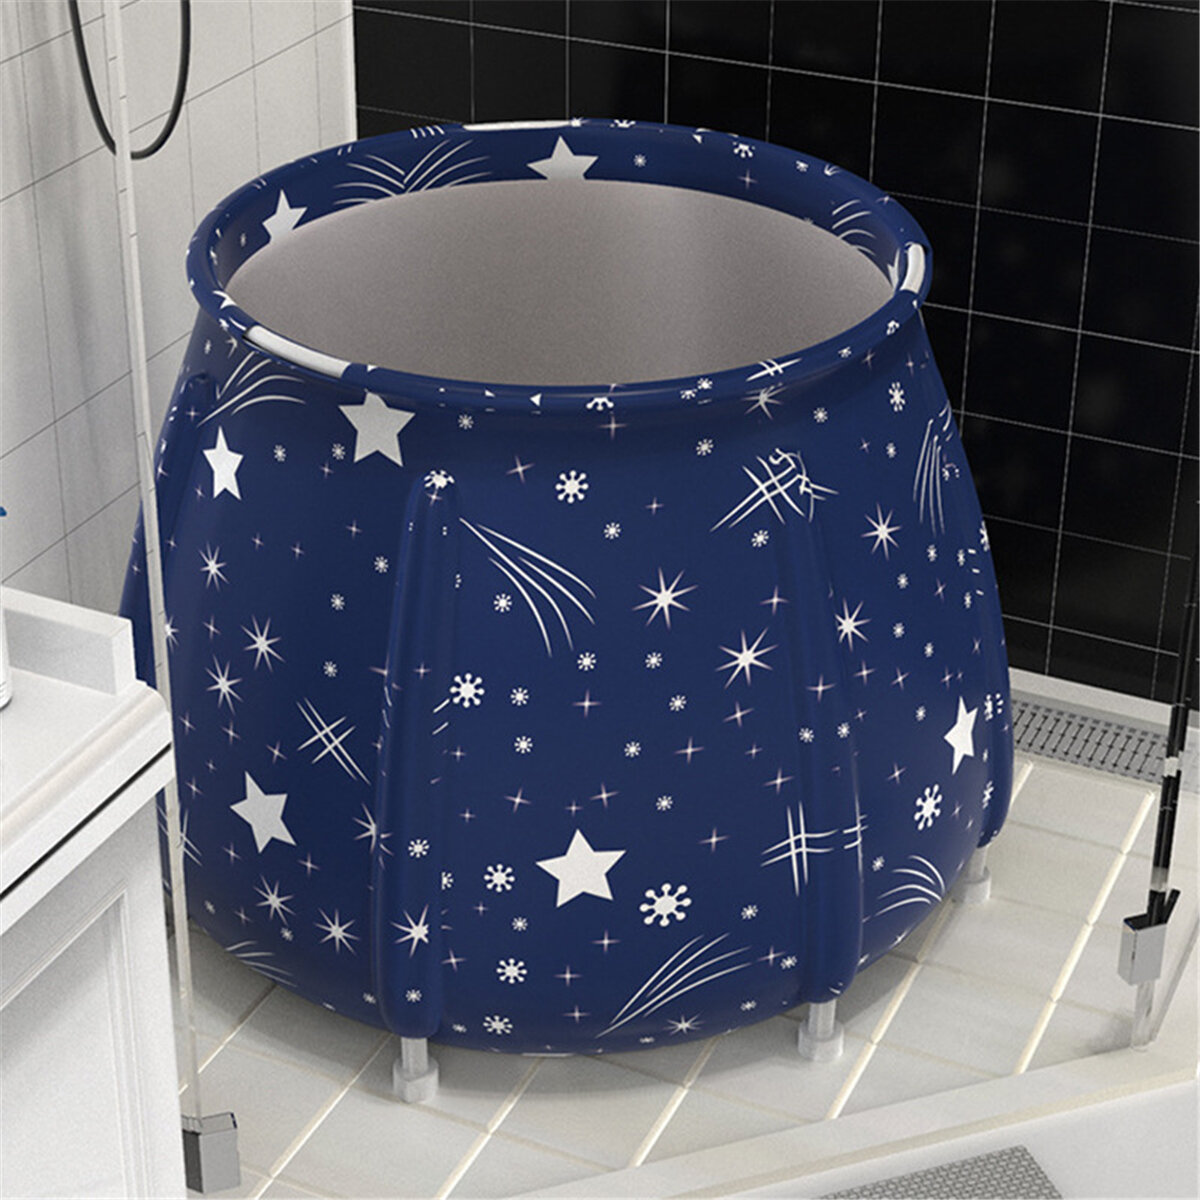 

70x65cm 6 Layers Thicken Portable Folding Bathtub Water Tub Indoor Outdoor Room Adult Spa Bath Bucket